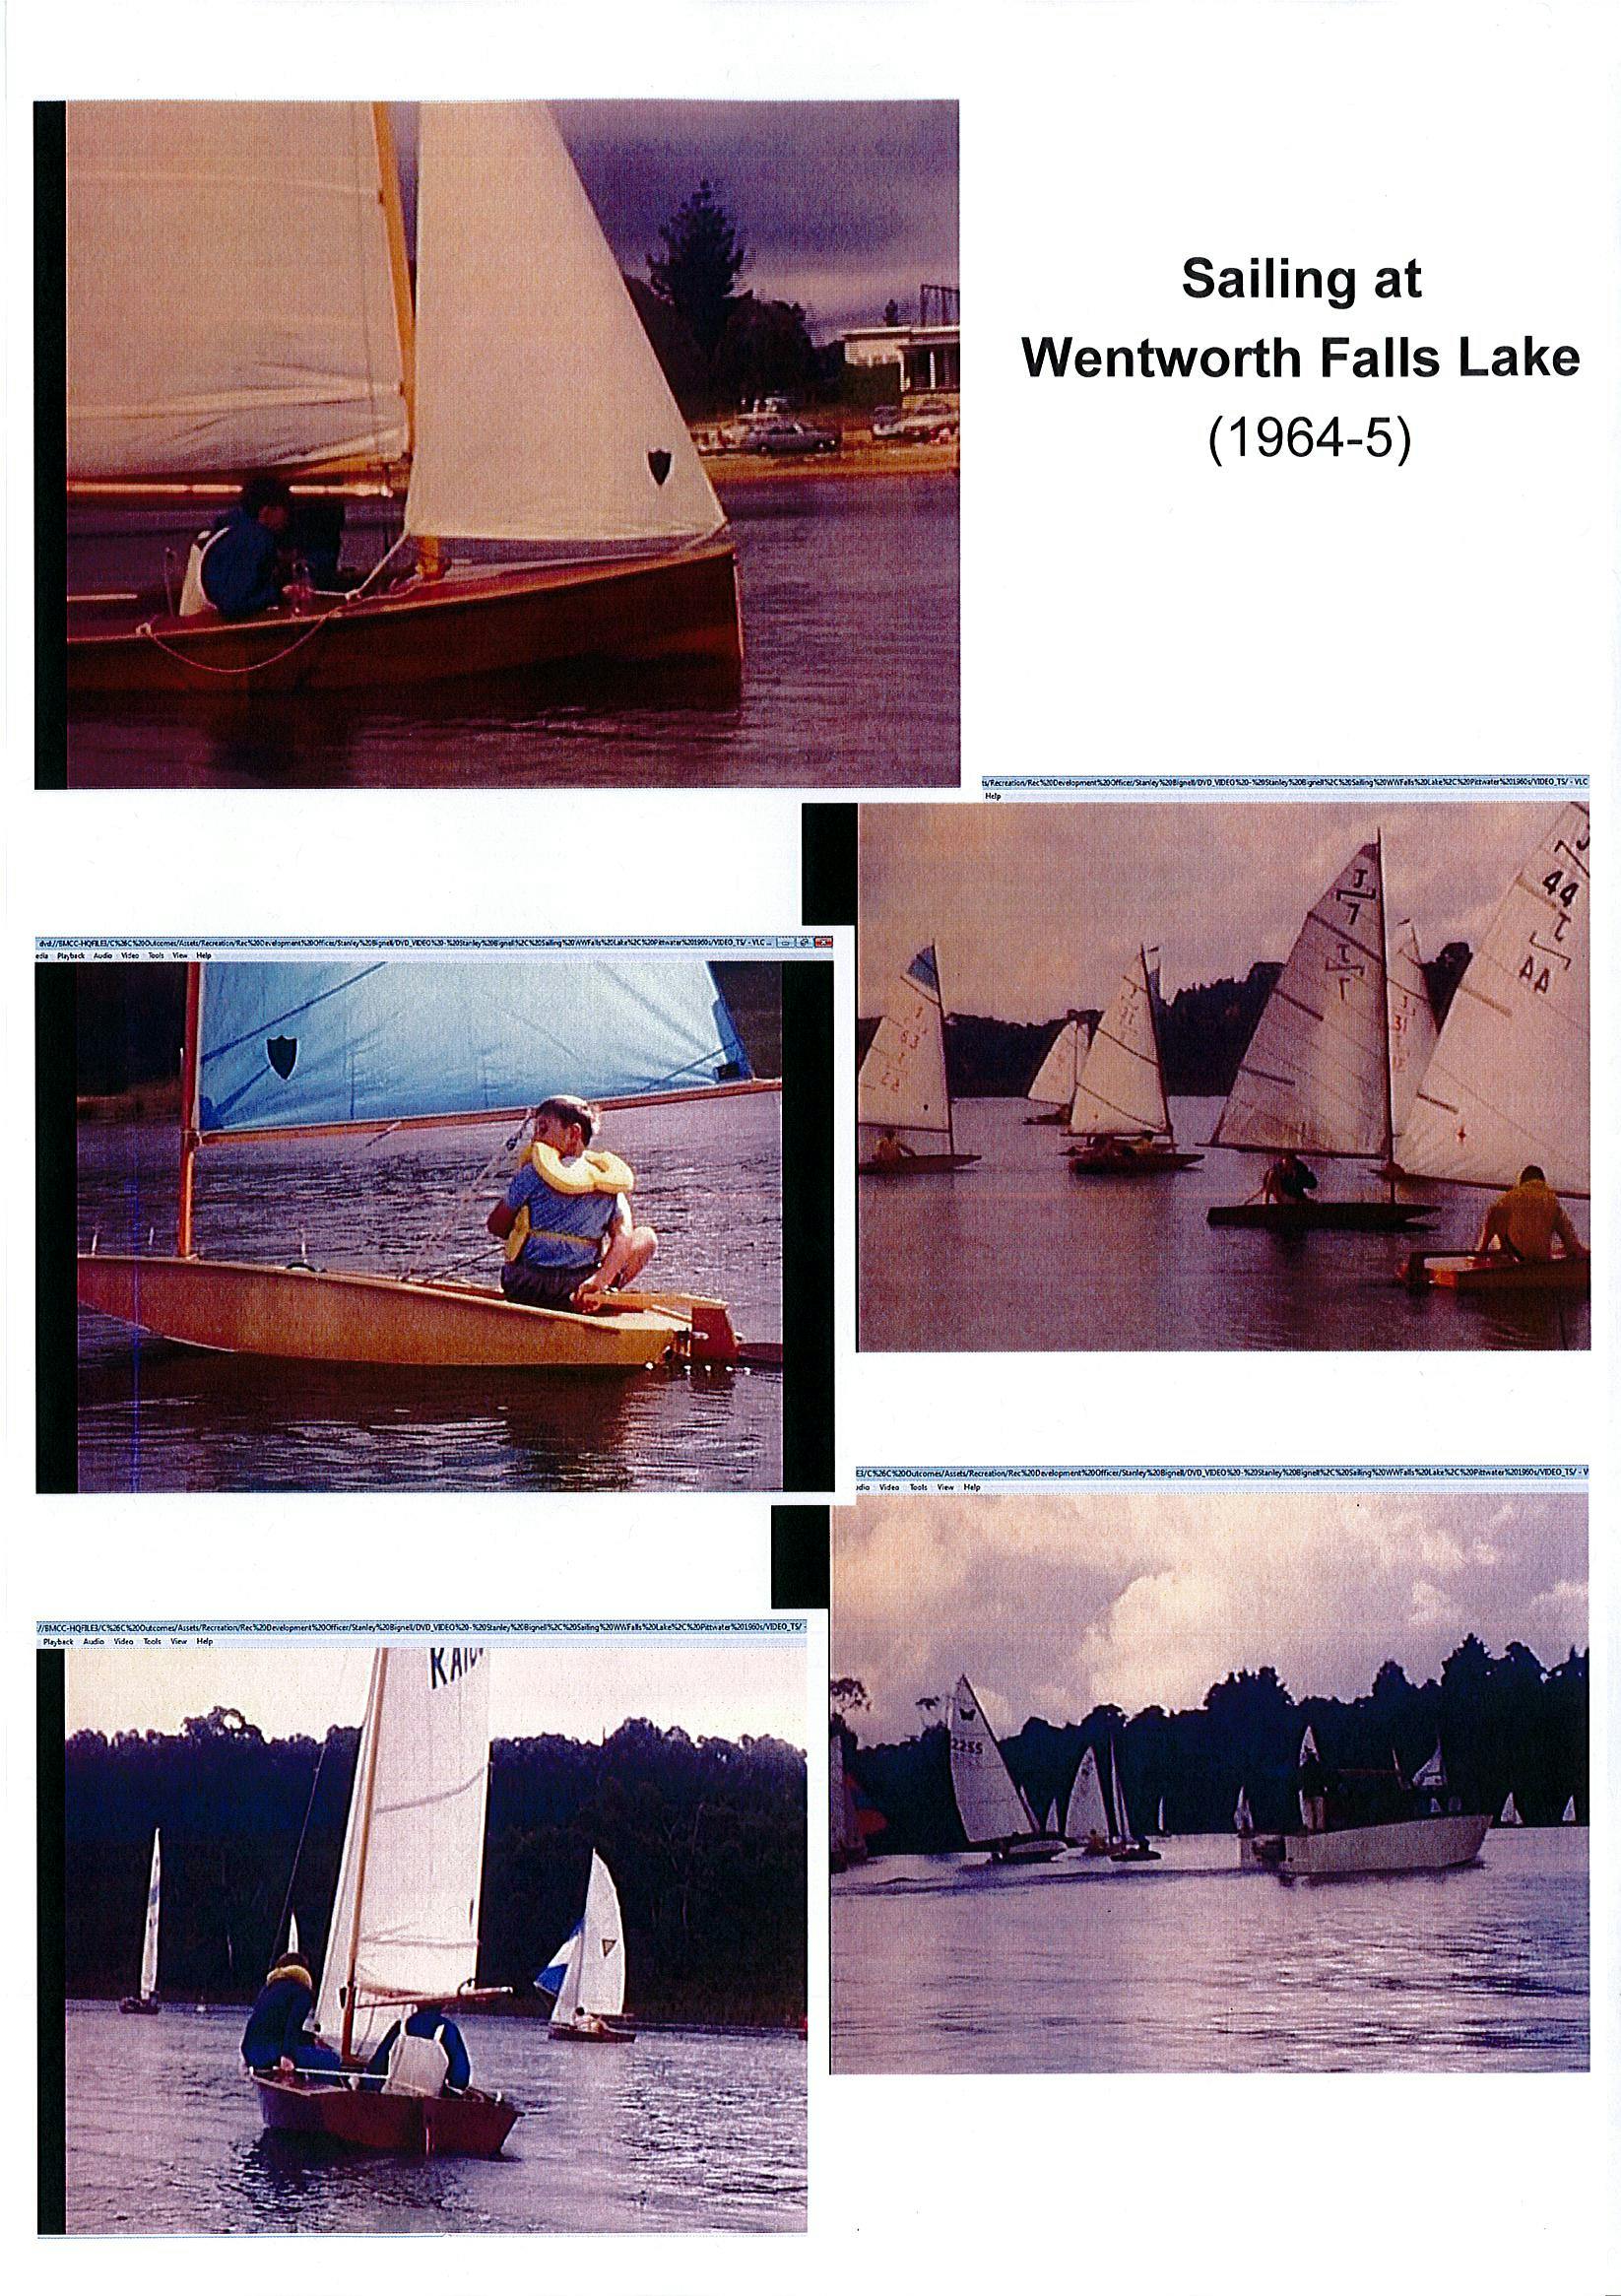 Sailing Pics Ww Falls Lake Stanley Bignell 2